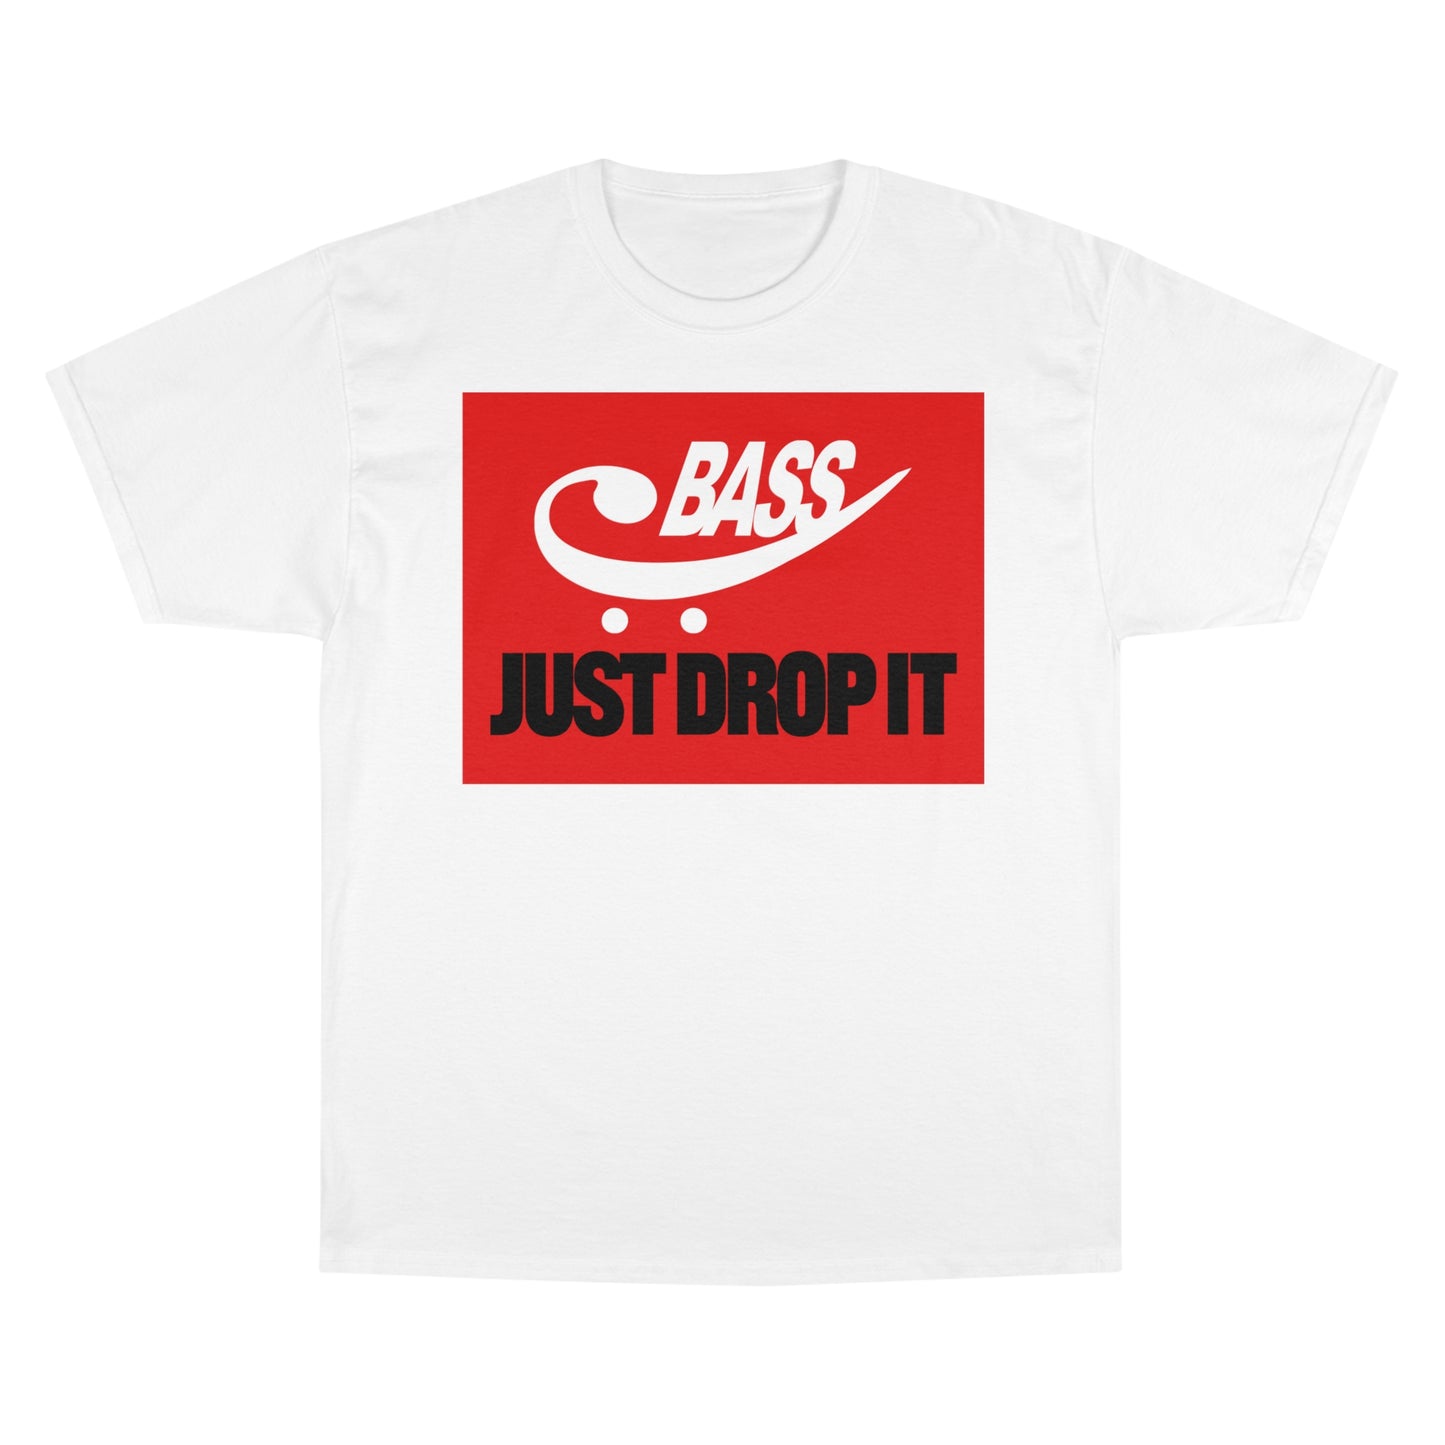 "BASS - Just Drop It" Champion T-Shirt